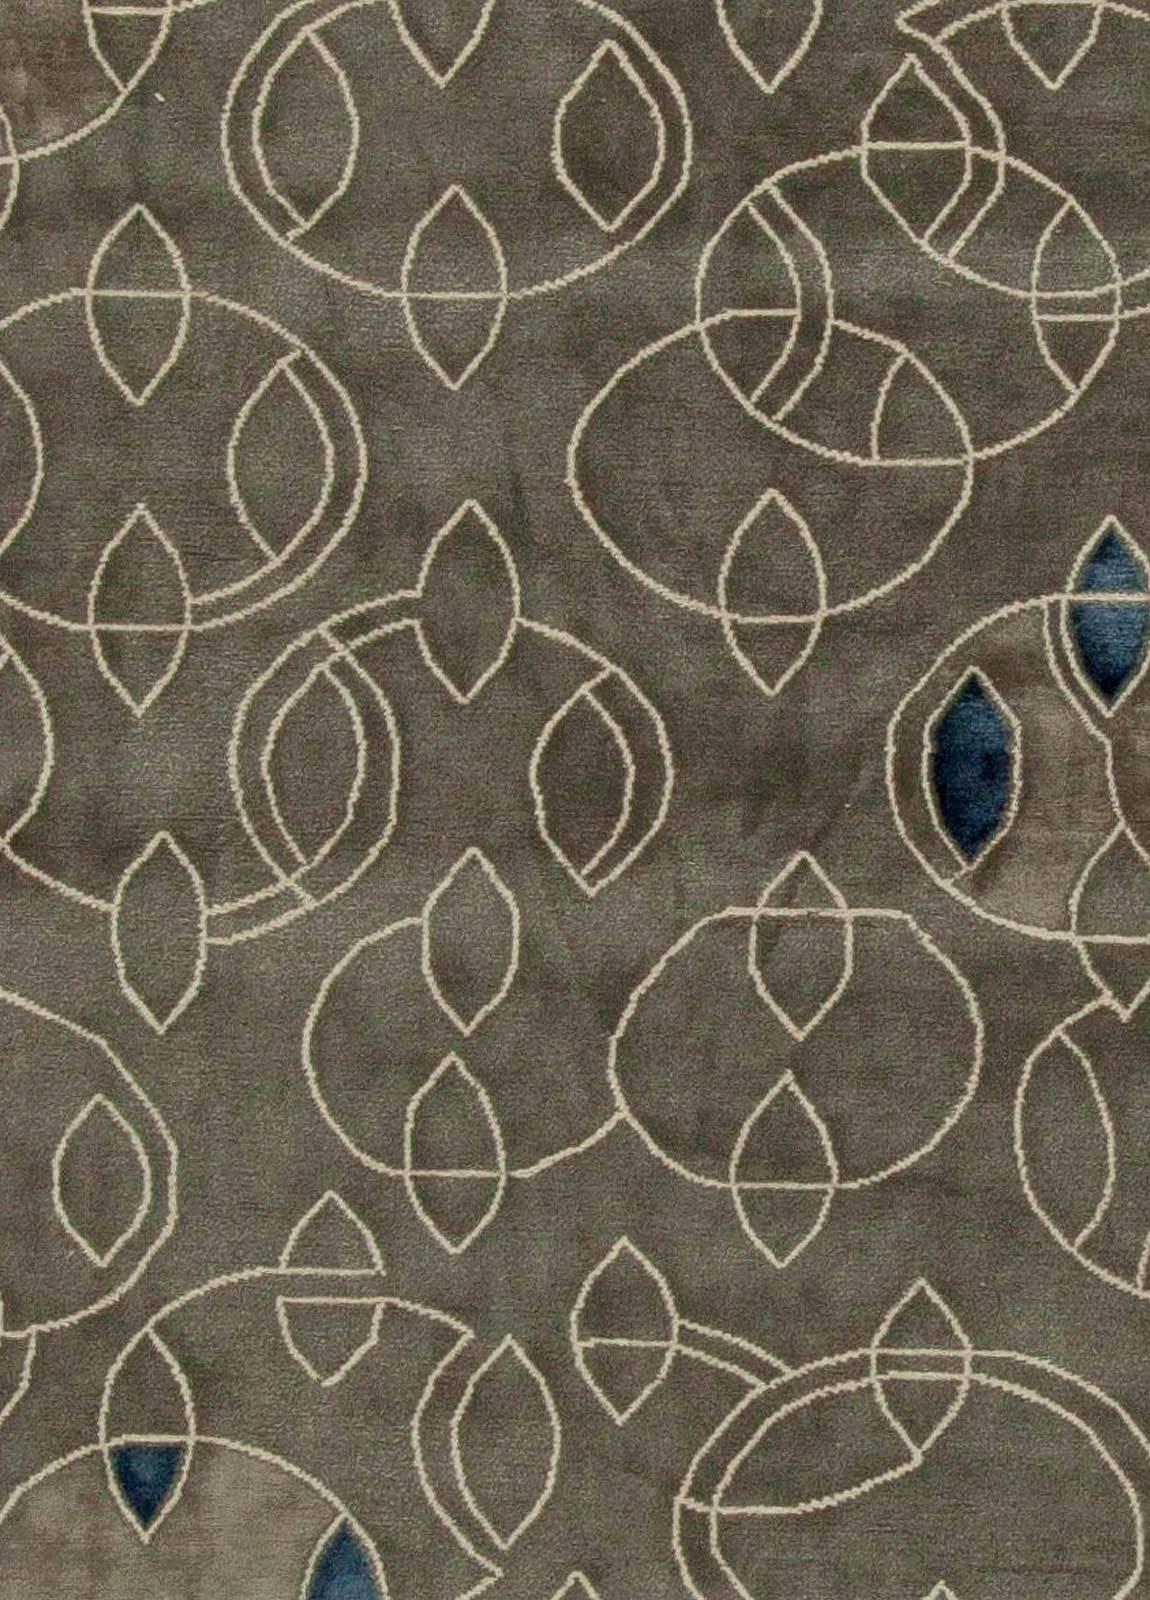 Contemporary Art Deco Design handmade wool and silk rug by Doris Leslie Blau.
Size: 11'10